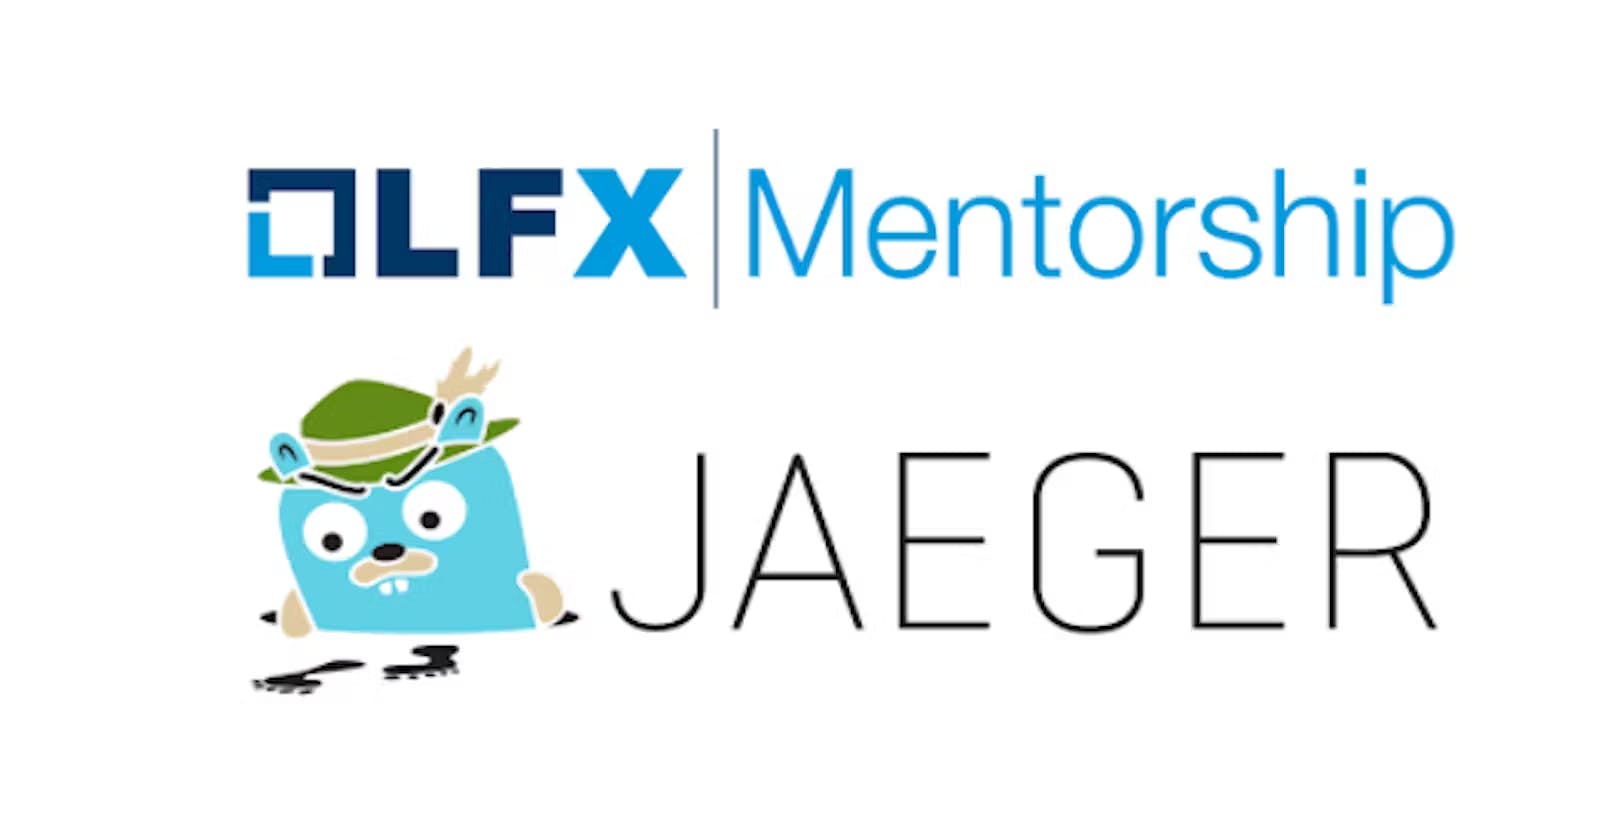 My LFX Mentorship Week 8 Experience with Jaeger